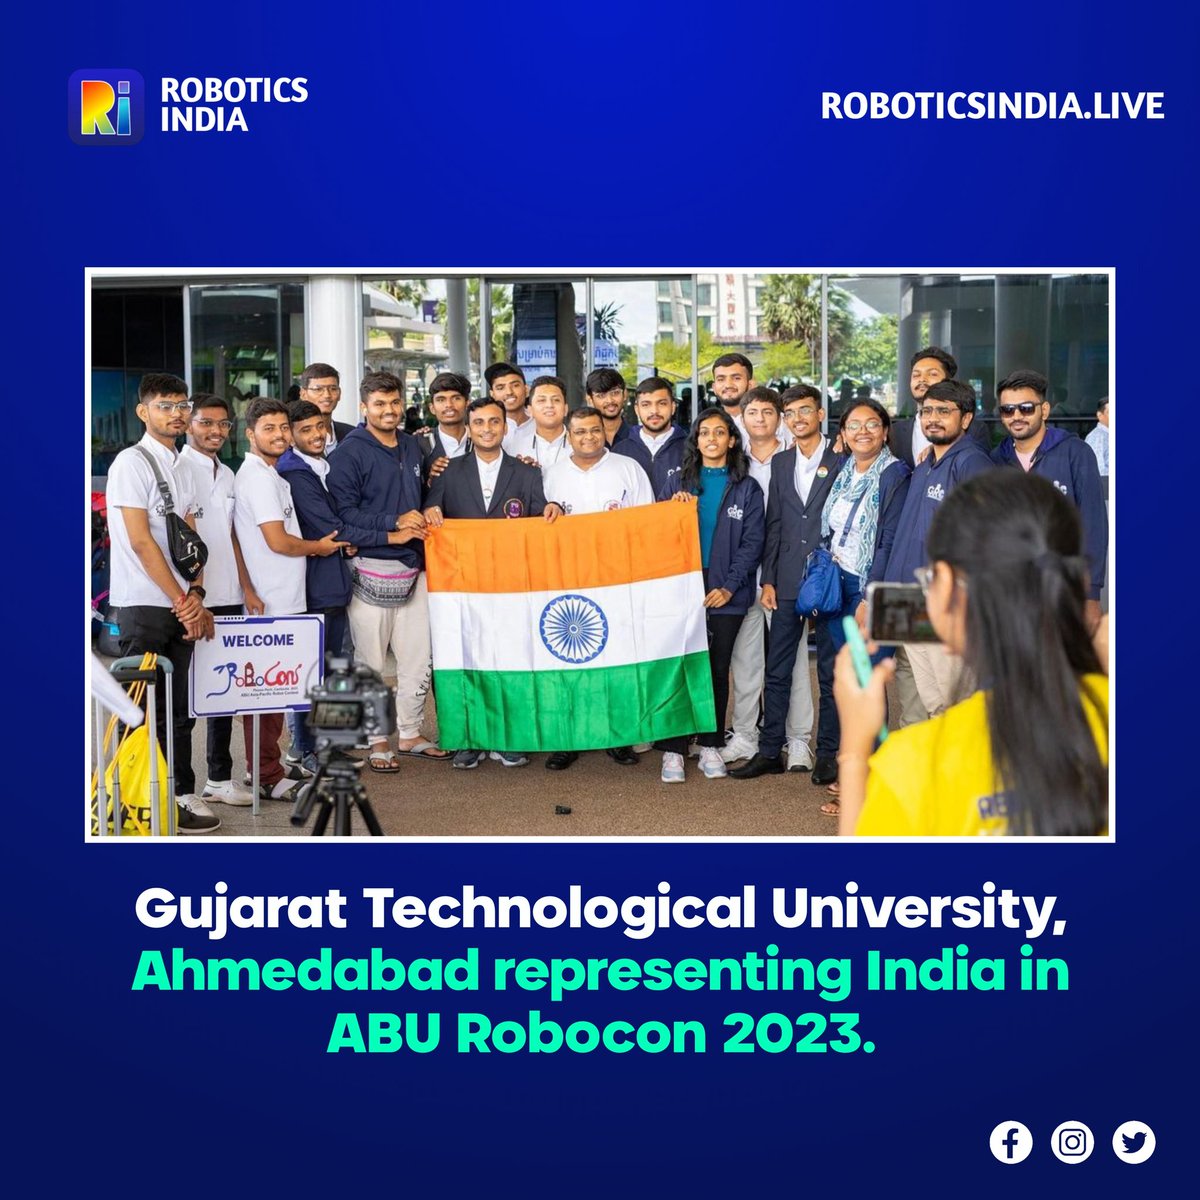 Best wishes to Team India 🇮🇳 for Robocon 2023! 

#TeamIndia #aburobocon2023  #Innovation #roboticschallenge #roboticscompetition #technews #robotech #roboticsengineering #roboticsengineer #roboticsclub #roboticsforkids #roboticsindia